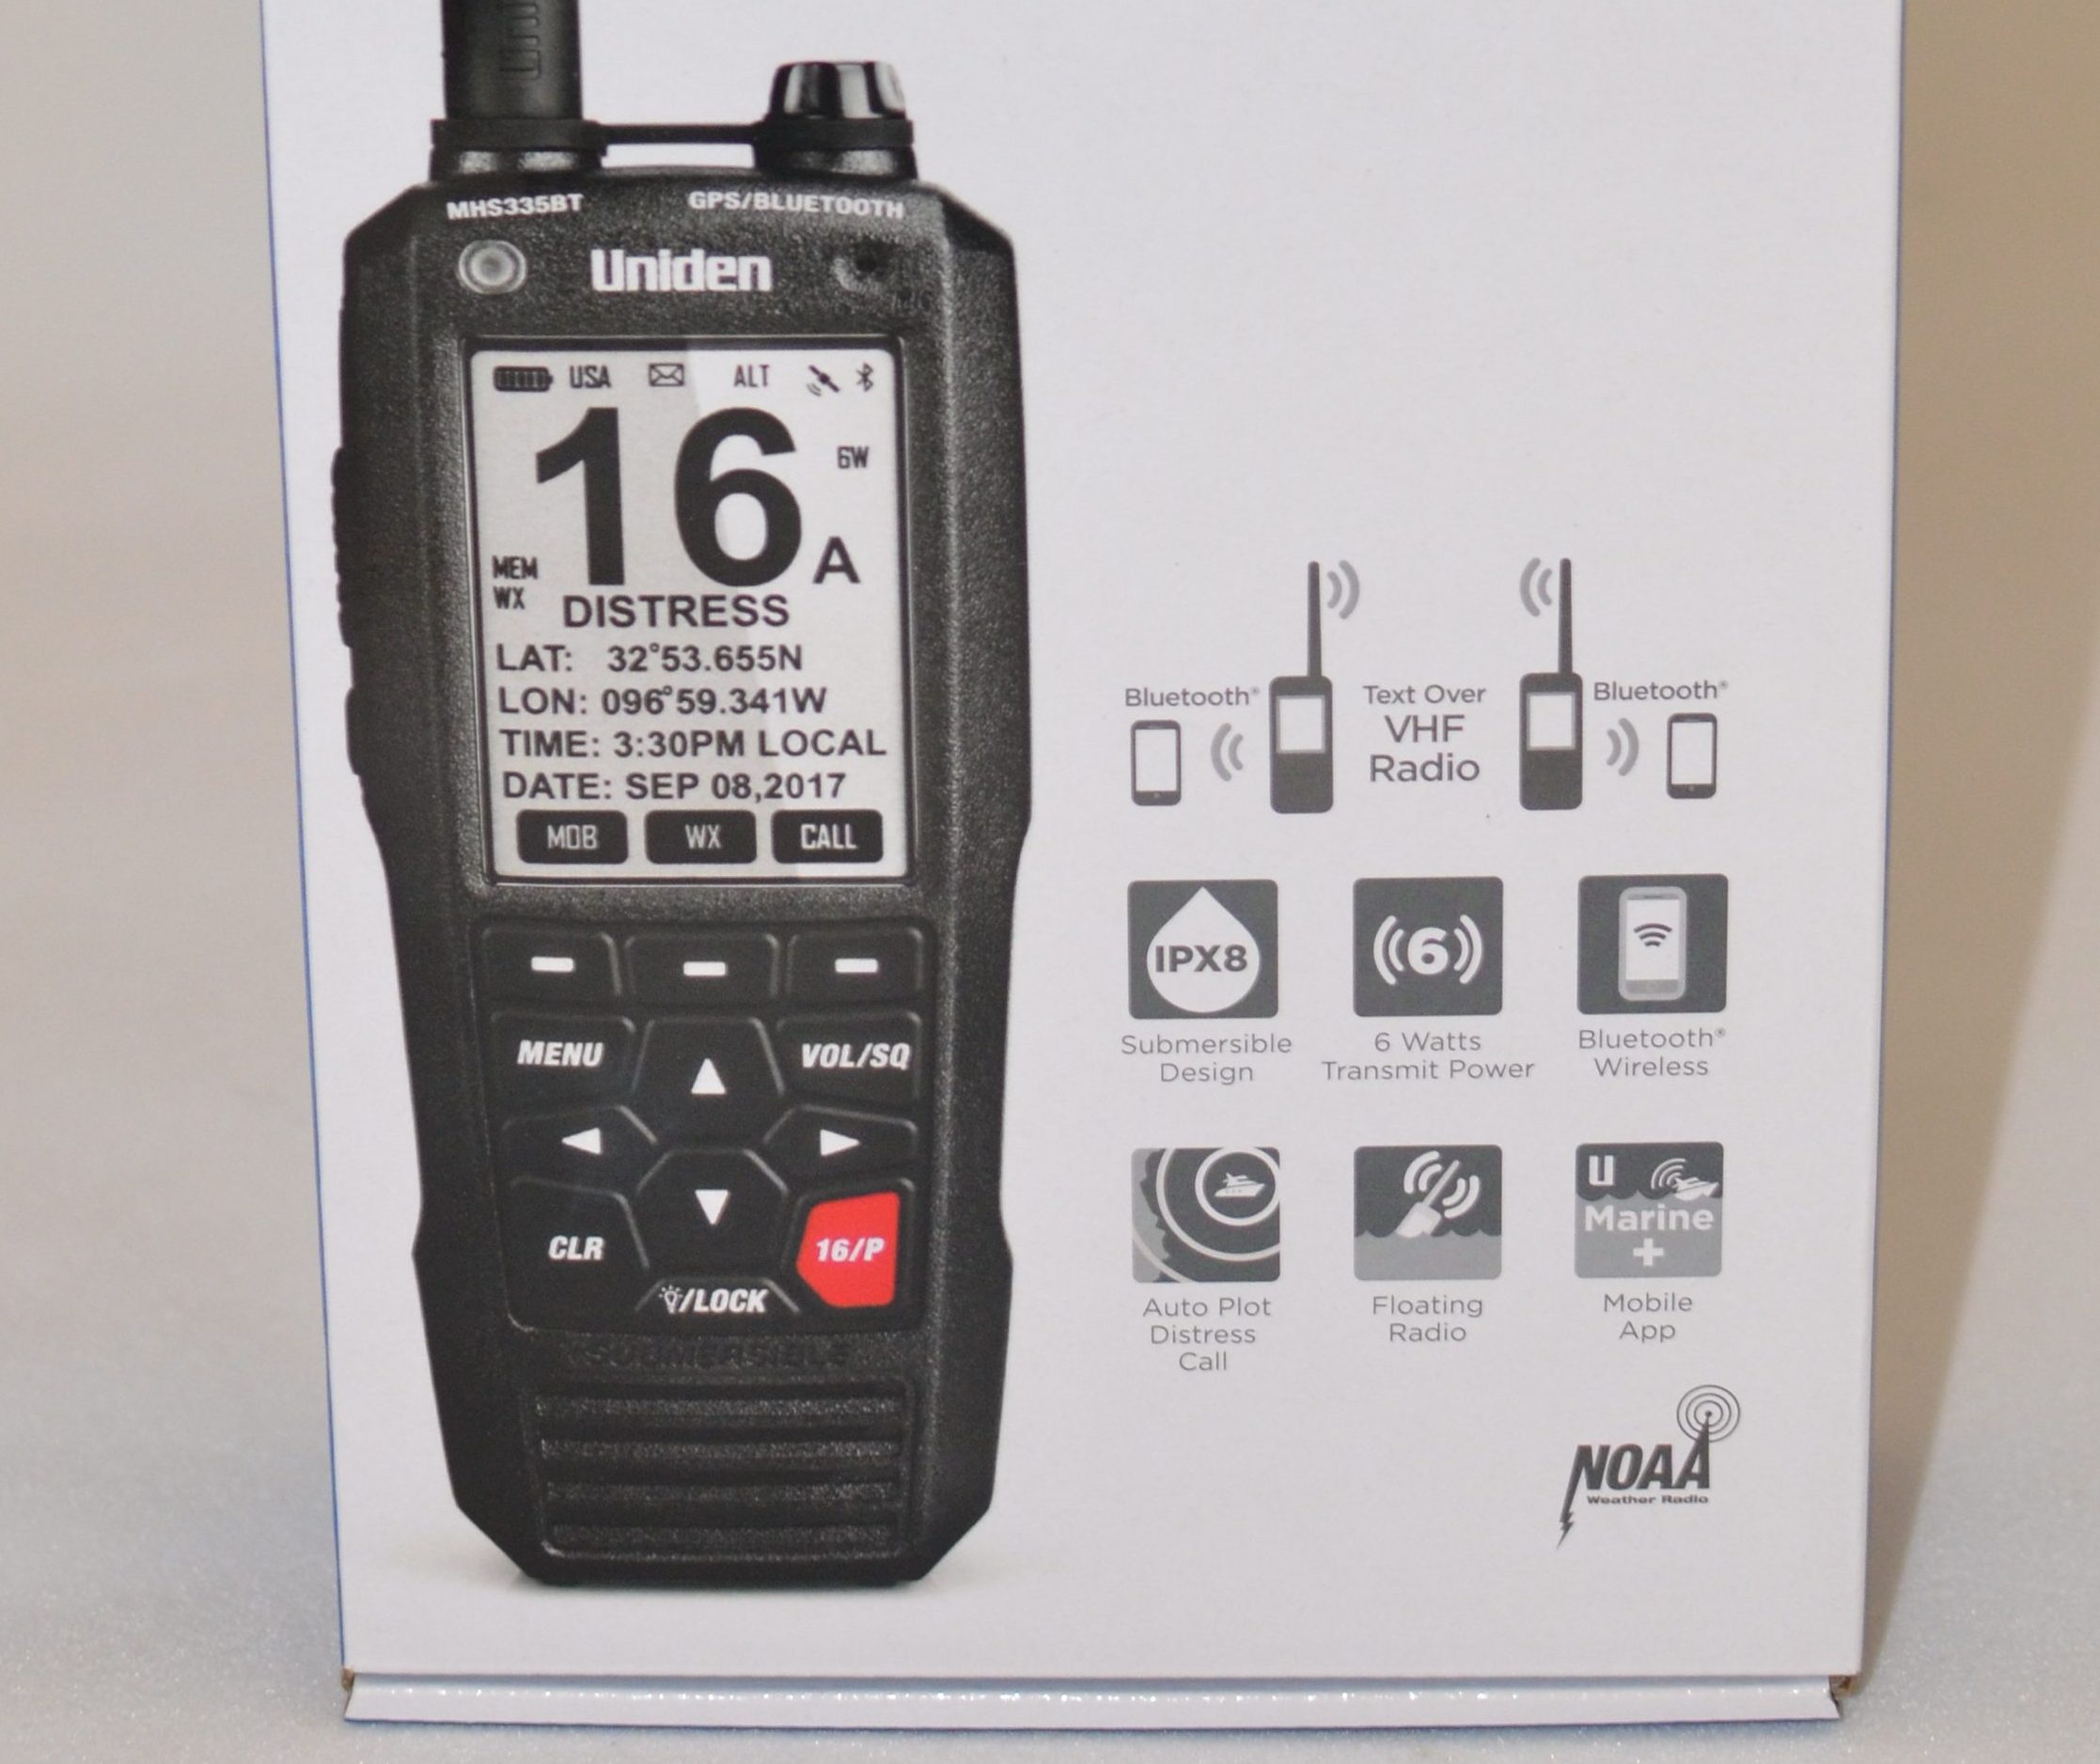 UB359 Handheld Scanning Receiver User Manual Main Page - Uniden